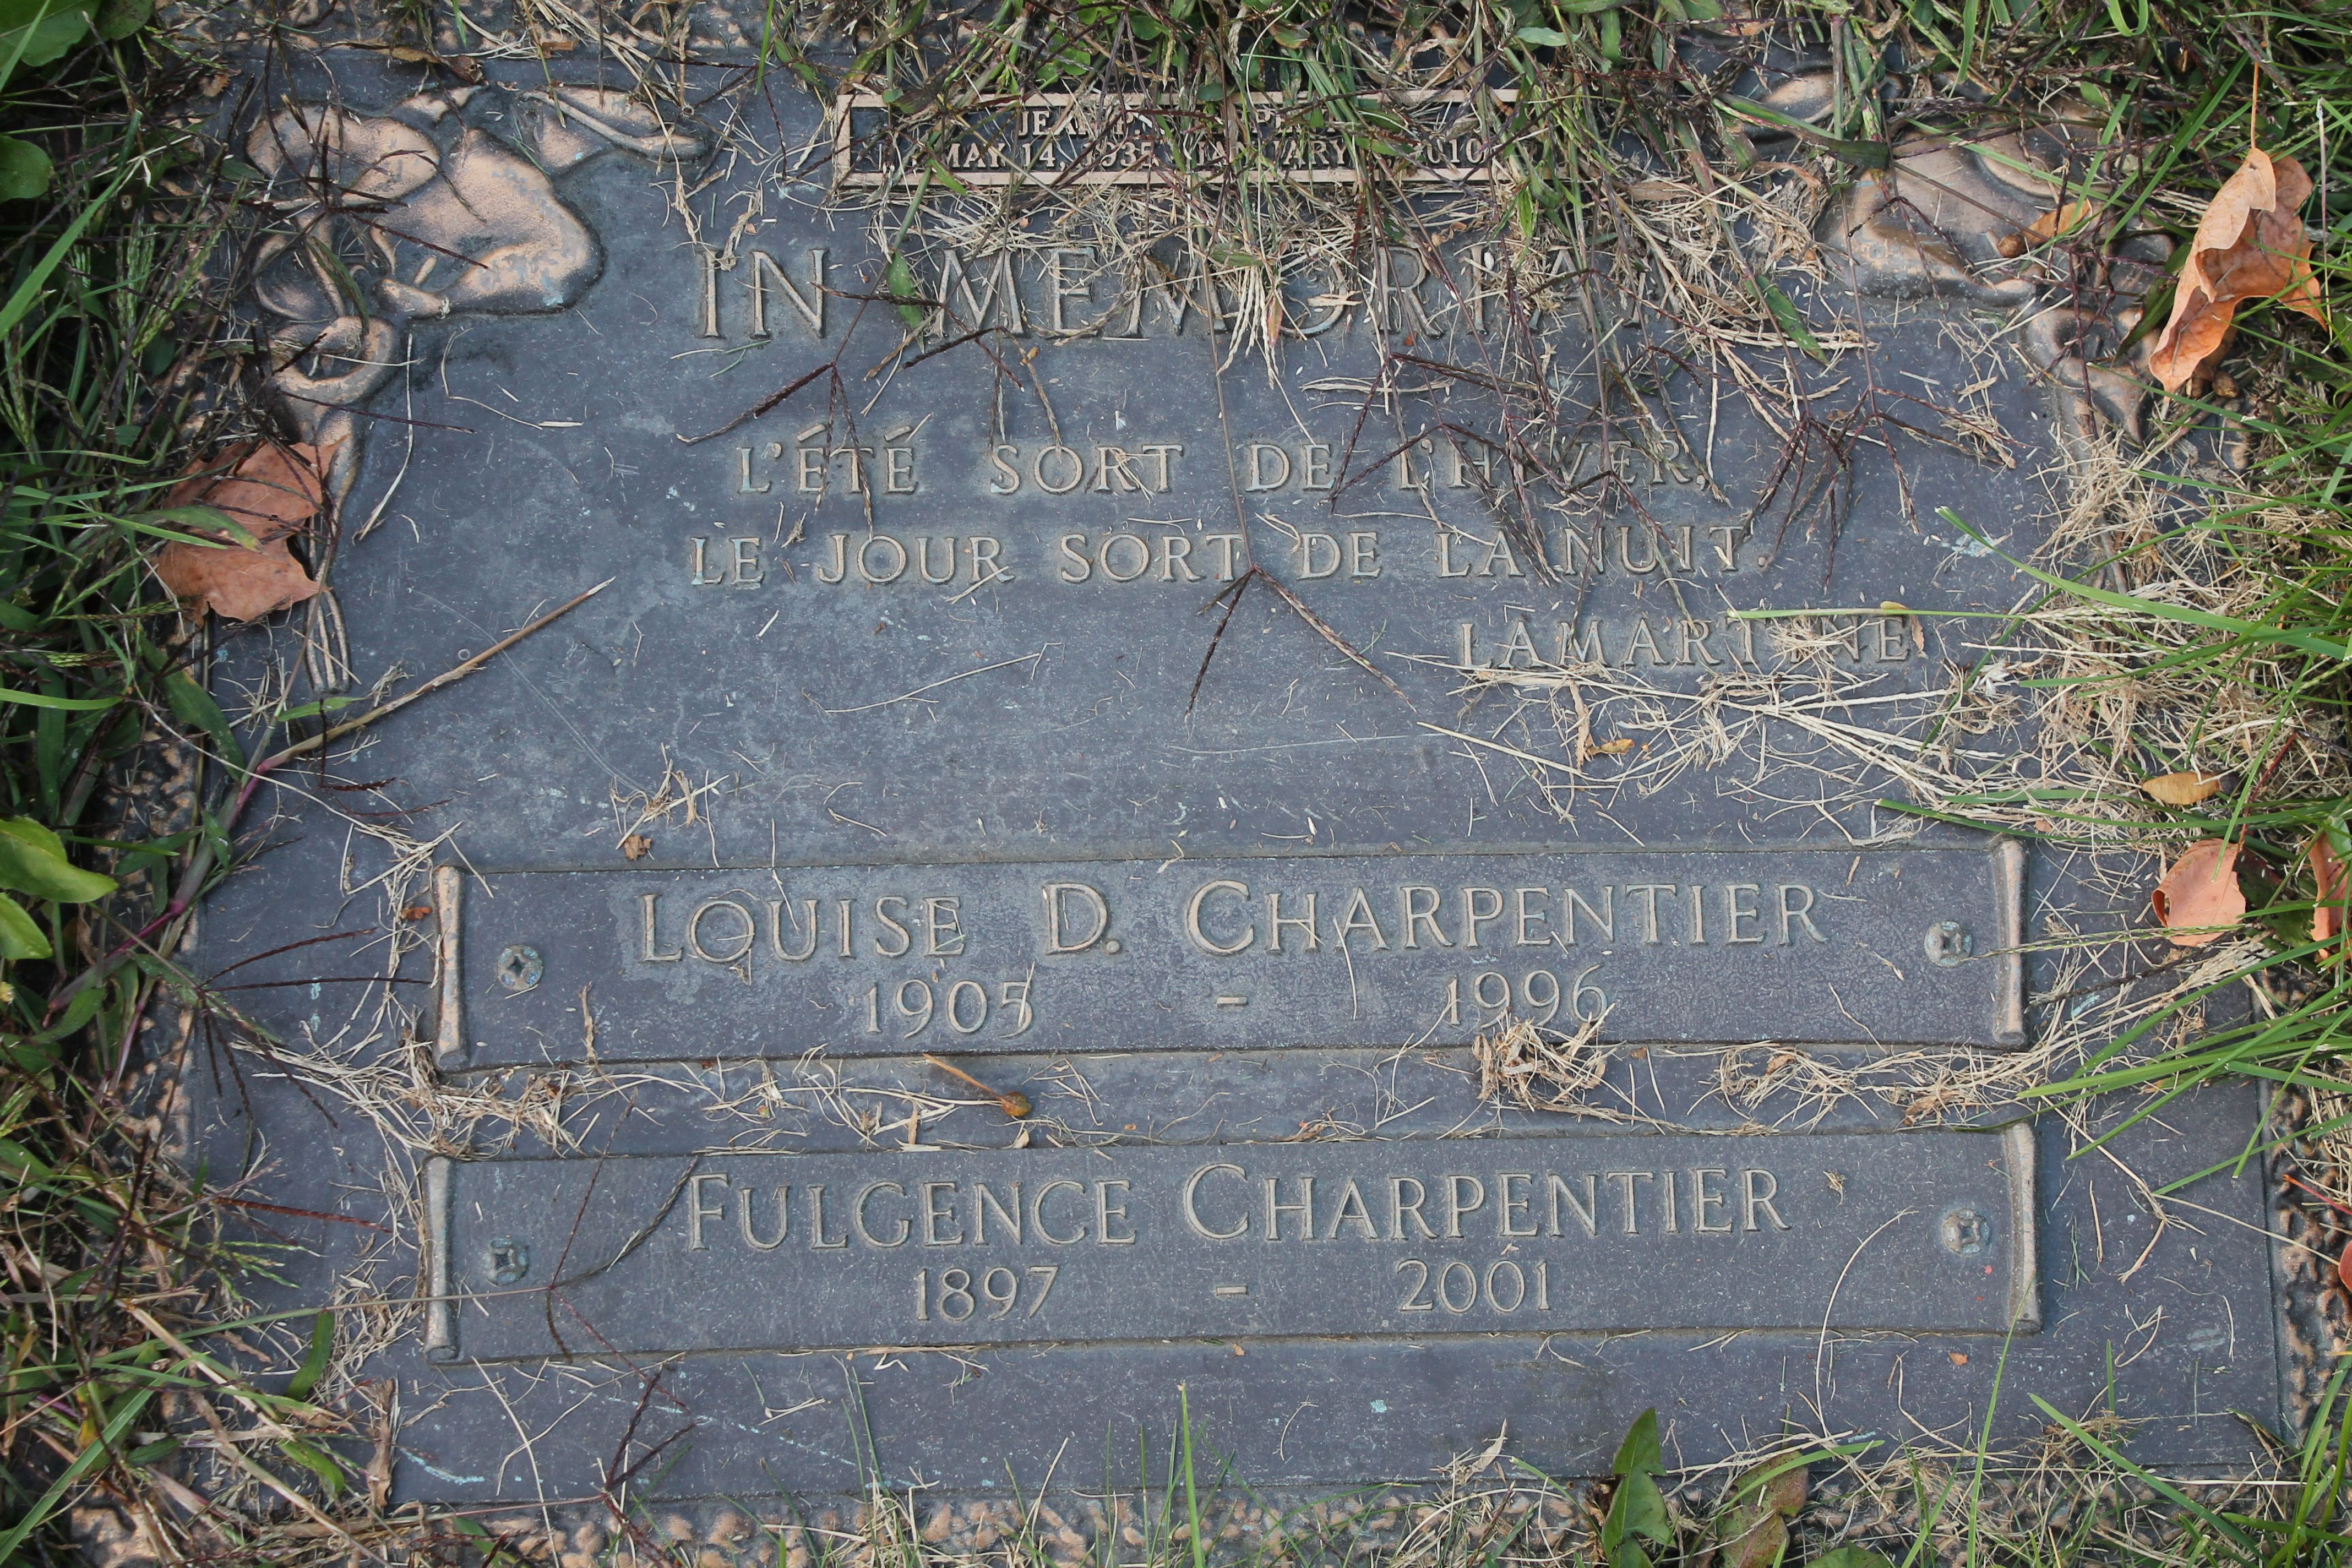 Fulgence Charpentier Grave